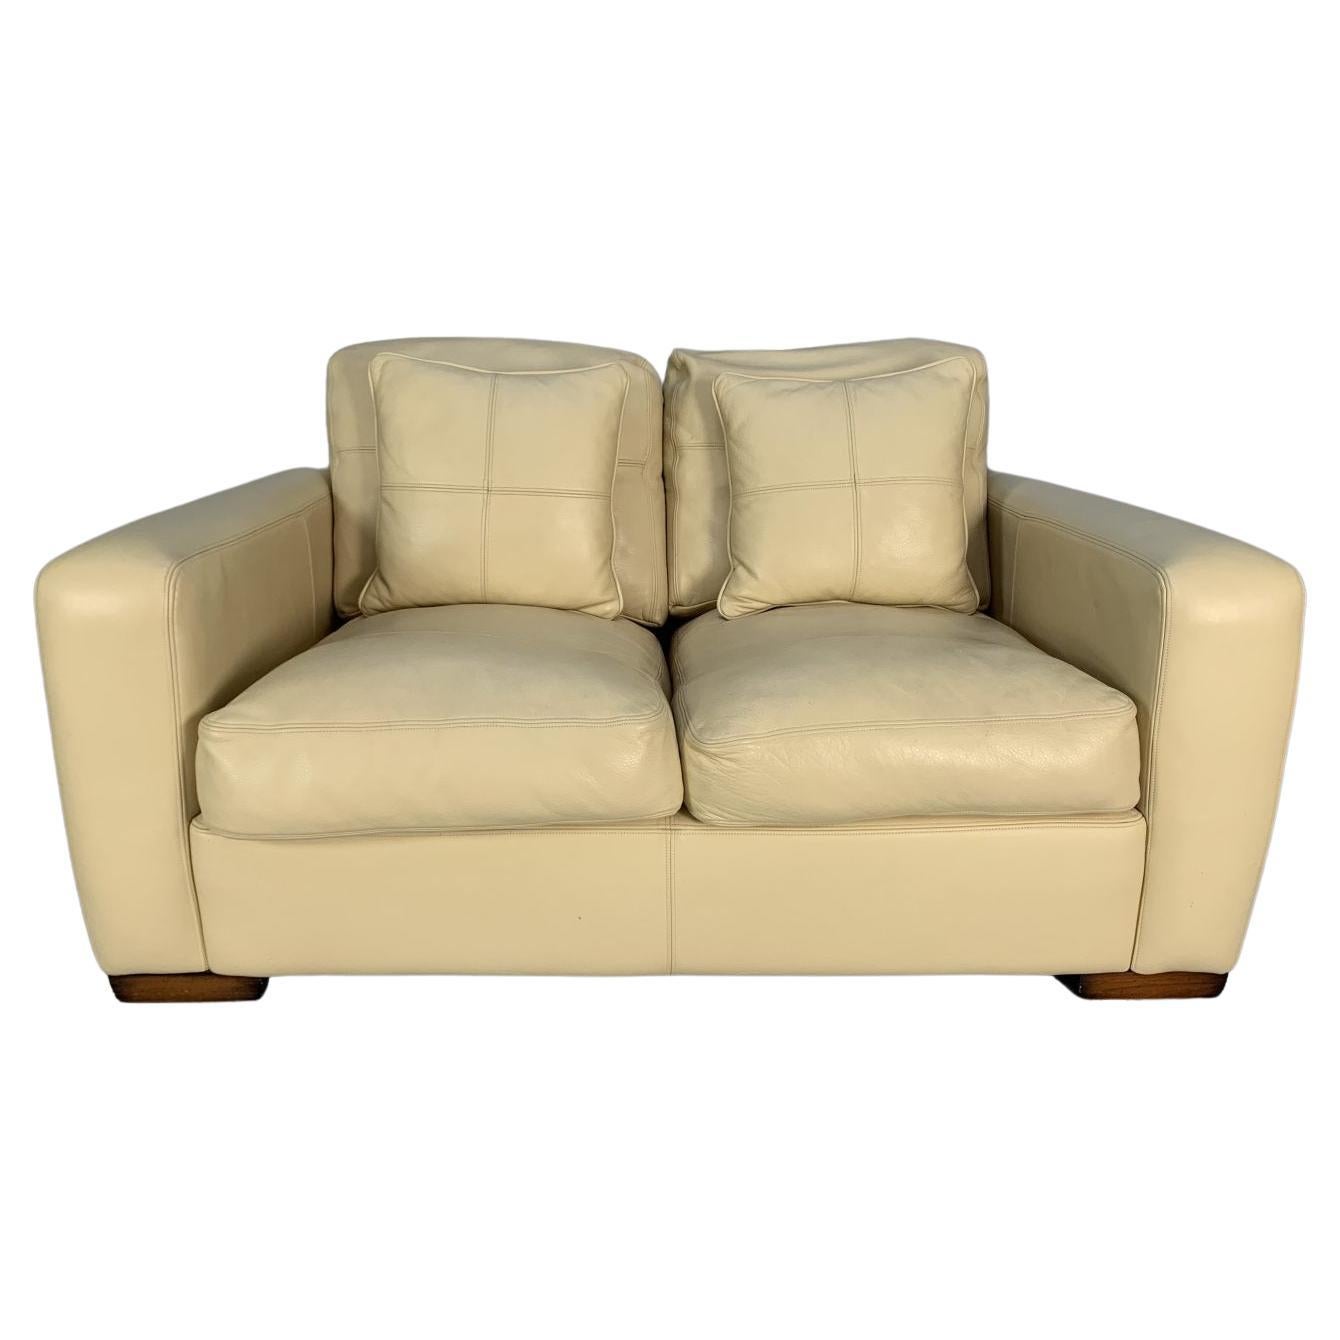 Duresta “Panther” 2-Seat Sofa – in Cream Leather